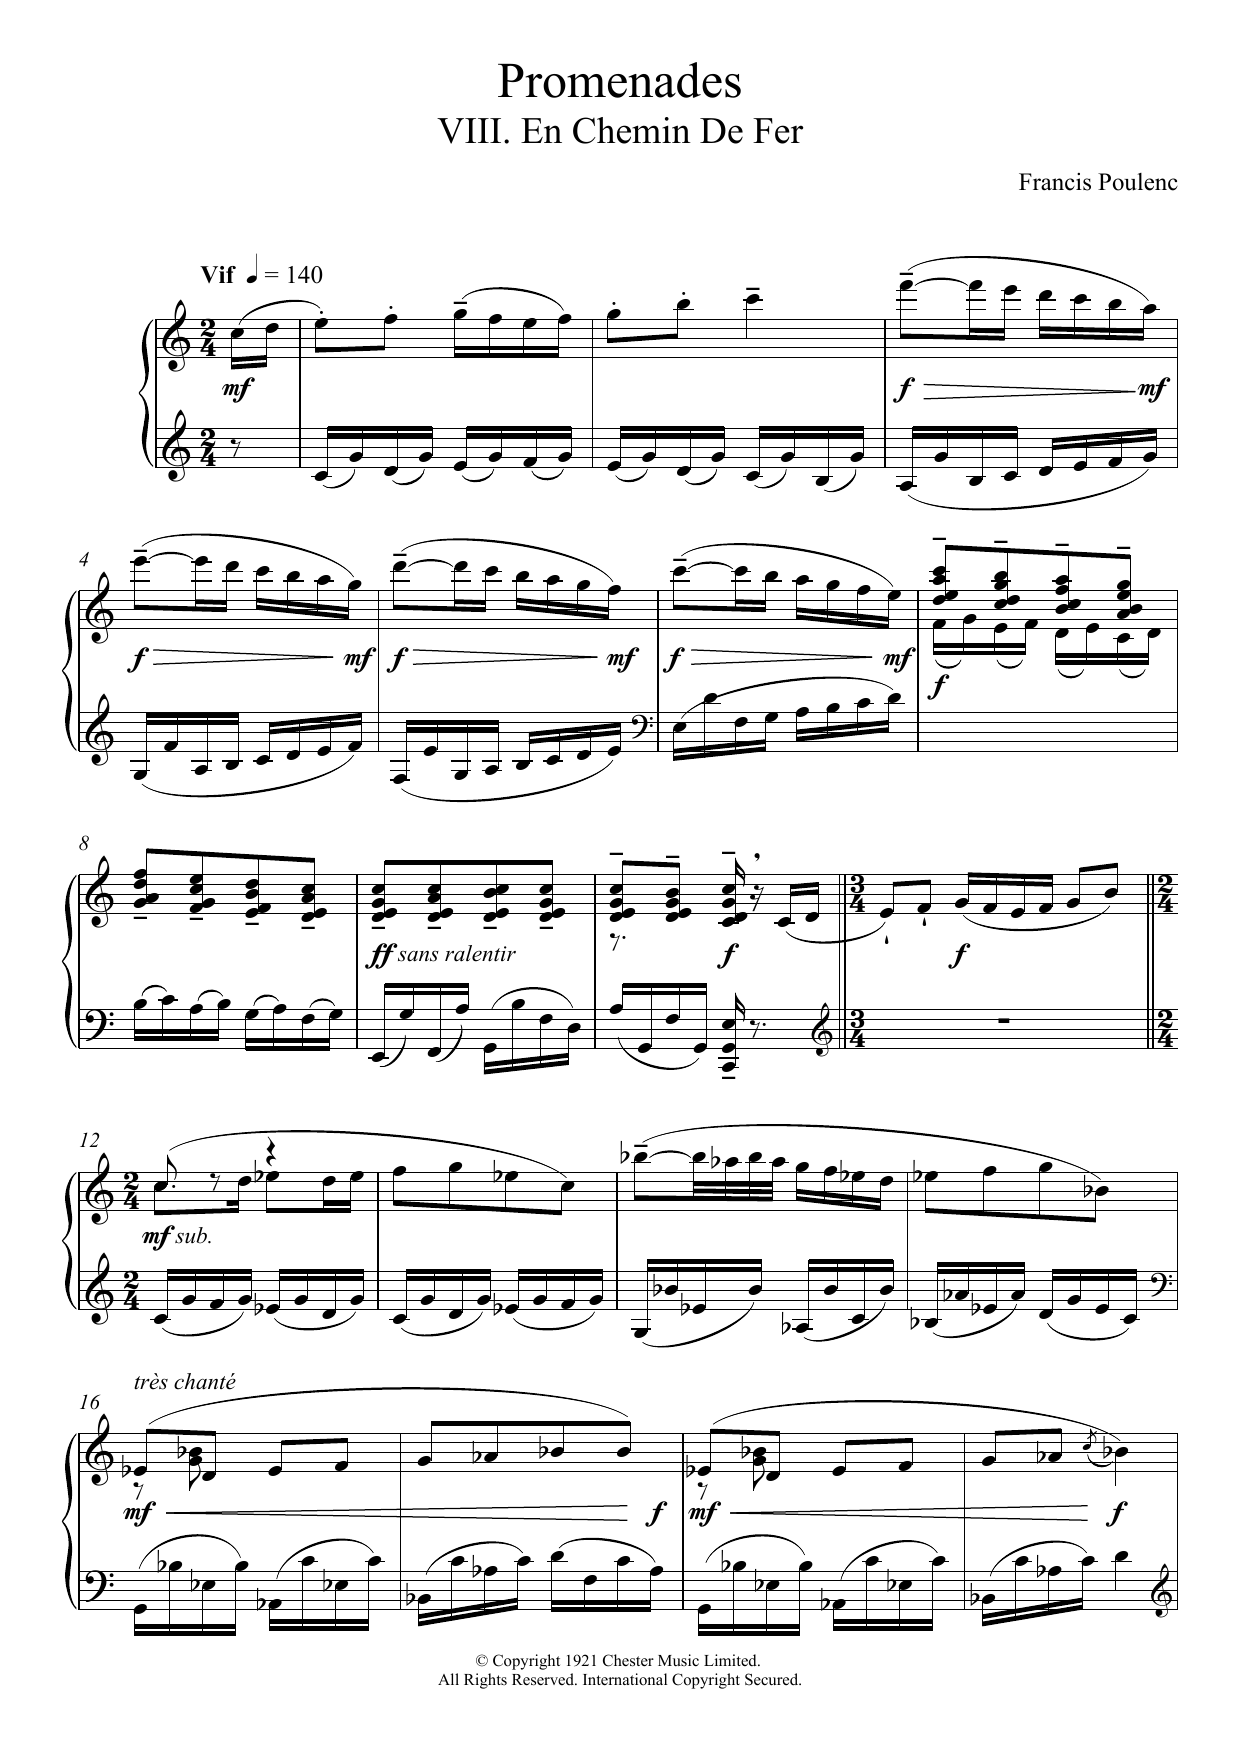 Francis Poulenc Promenades - VIII. En Chemin De Fer Sheet Music Notes & Chords for Piano - Download or Print PDF